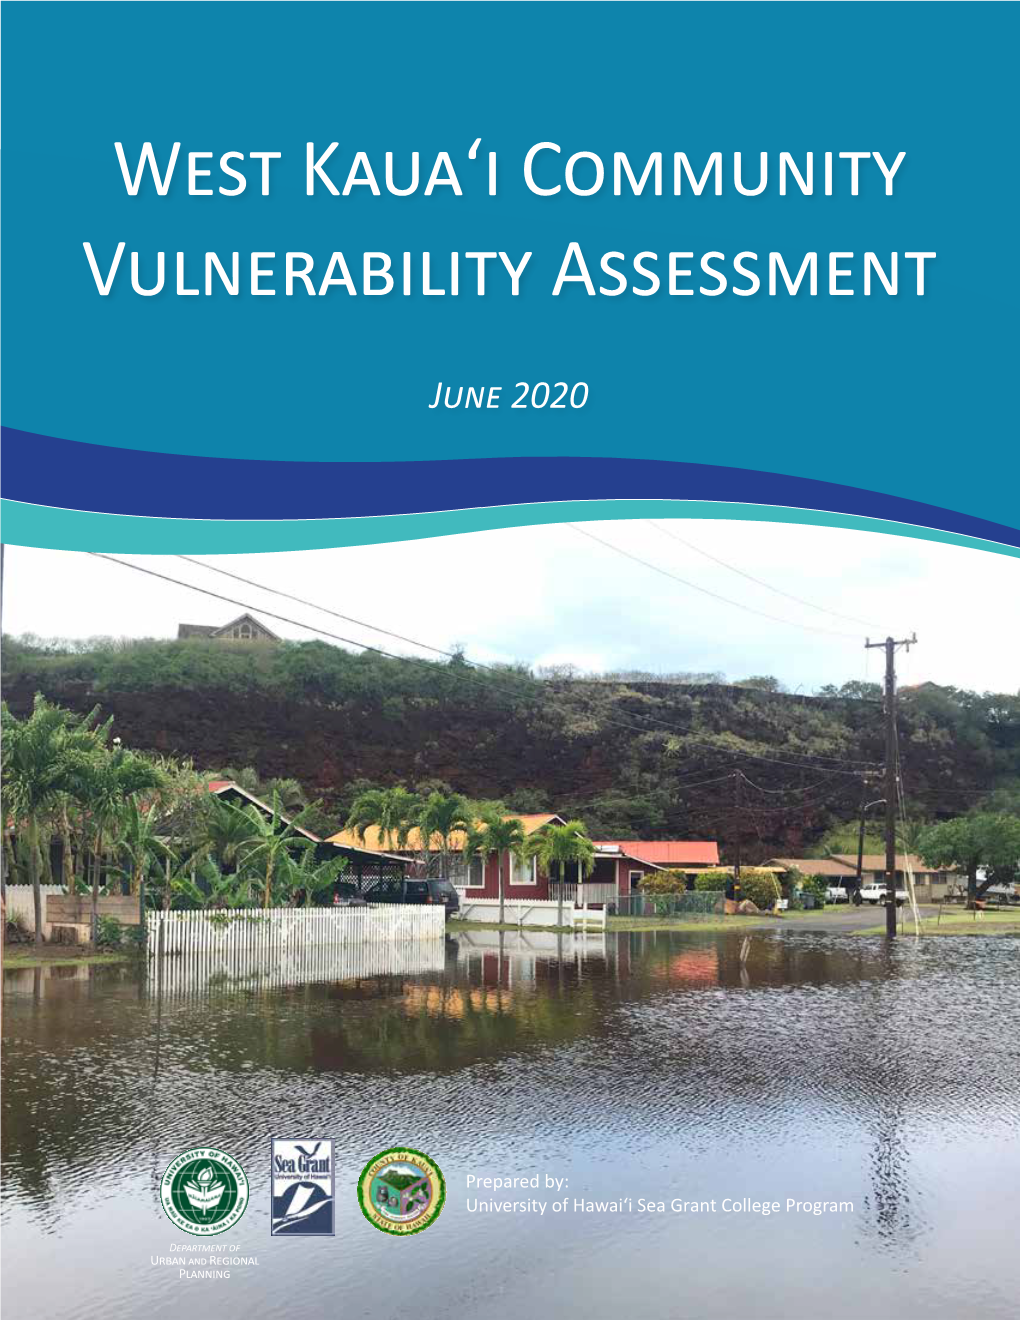 West Kauai Community Vulnerability Assessment